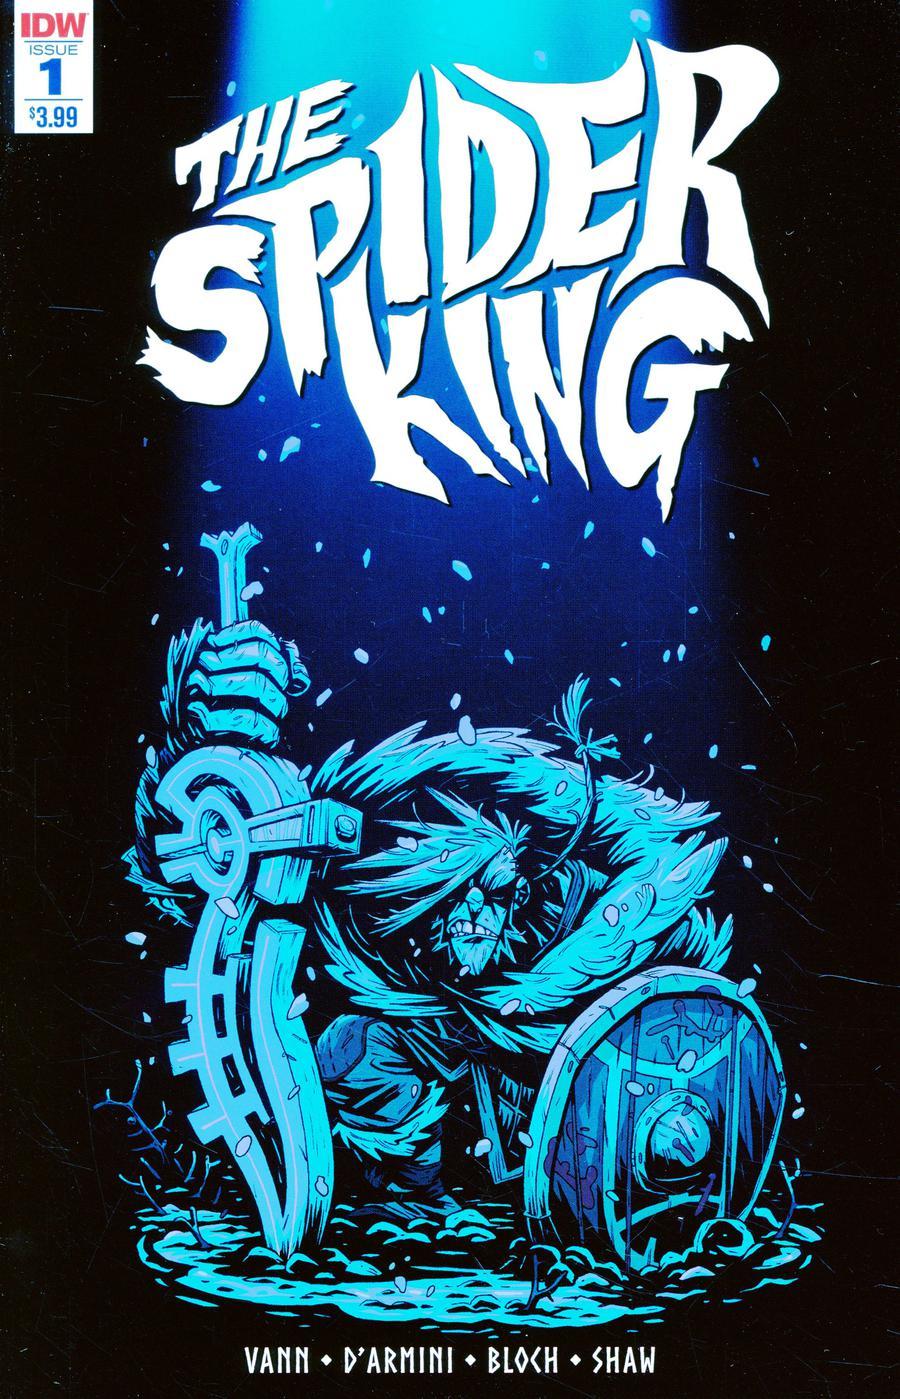 Spider King Vol. 1 #1